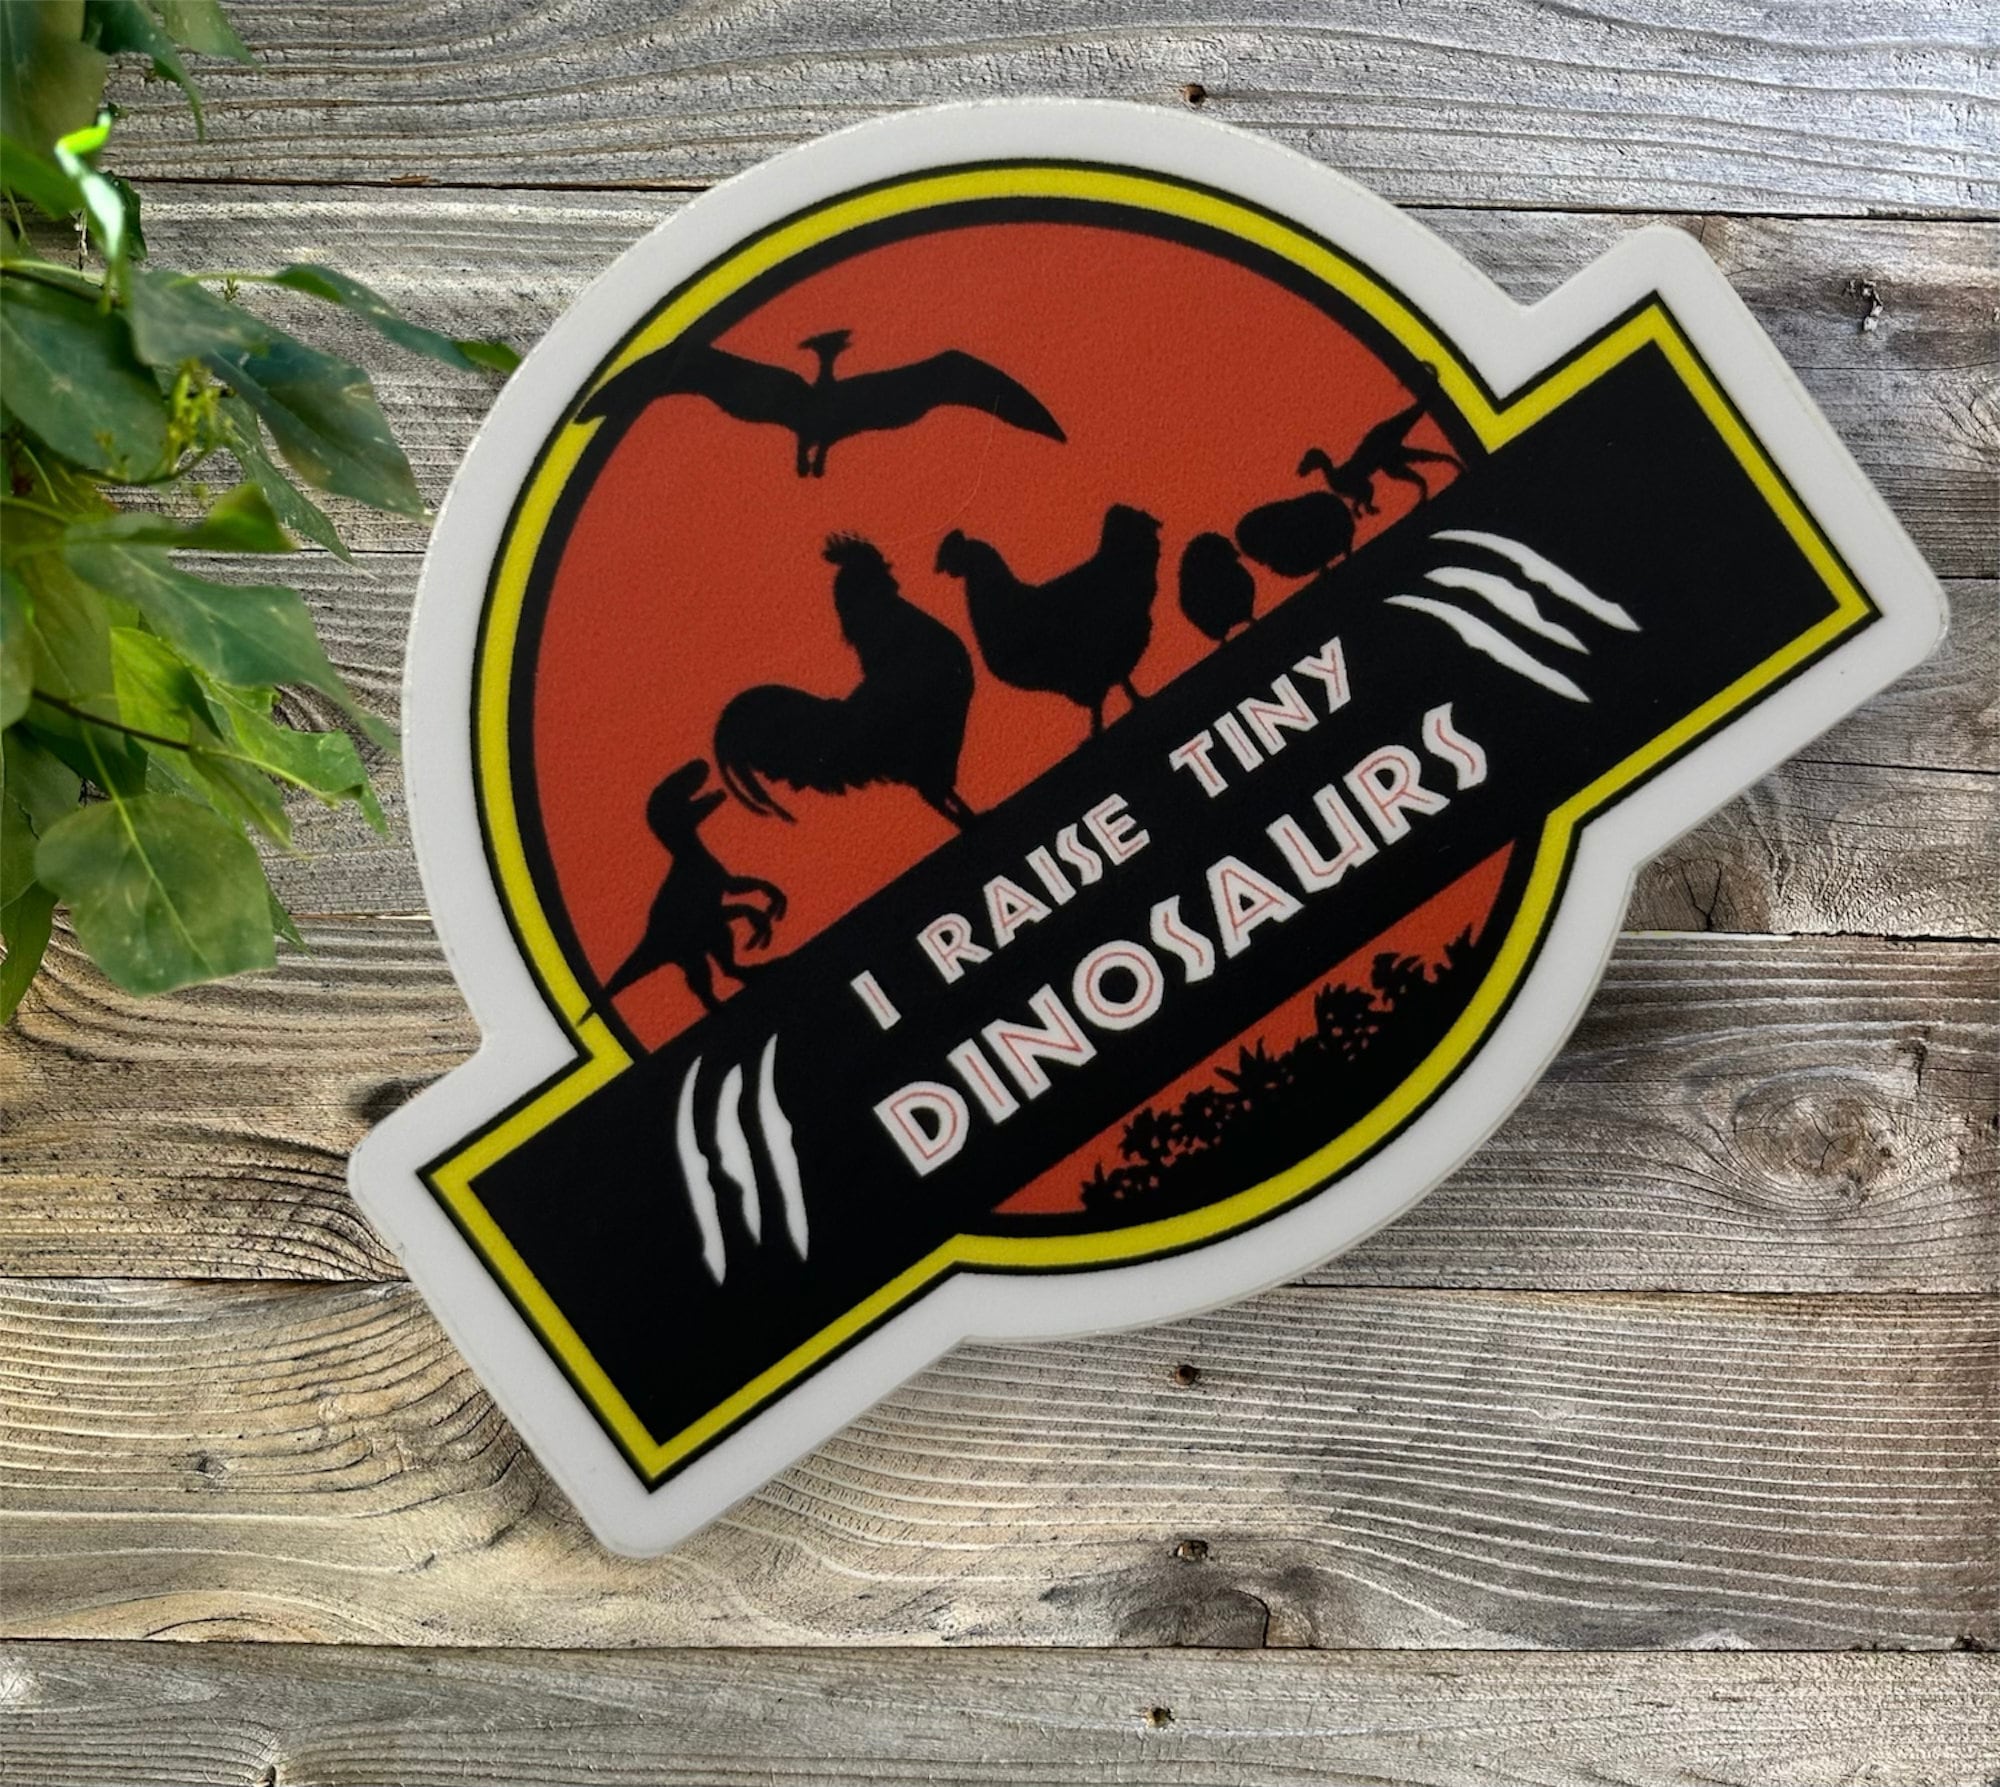 Variety pack mini dinosaur stickers, 5 pack dinosaur stickers, triceratops,  stegosaurus, T-Rex, pterodactyl, sauropod